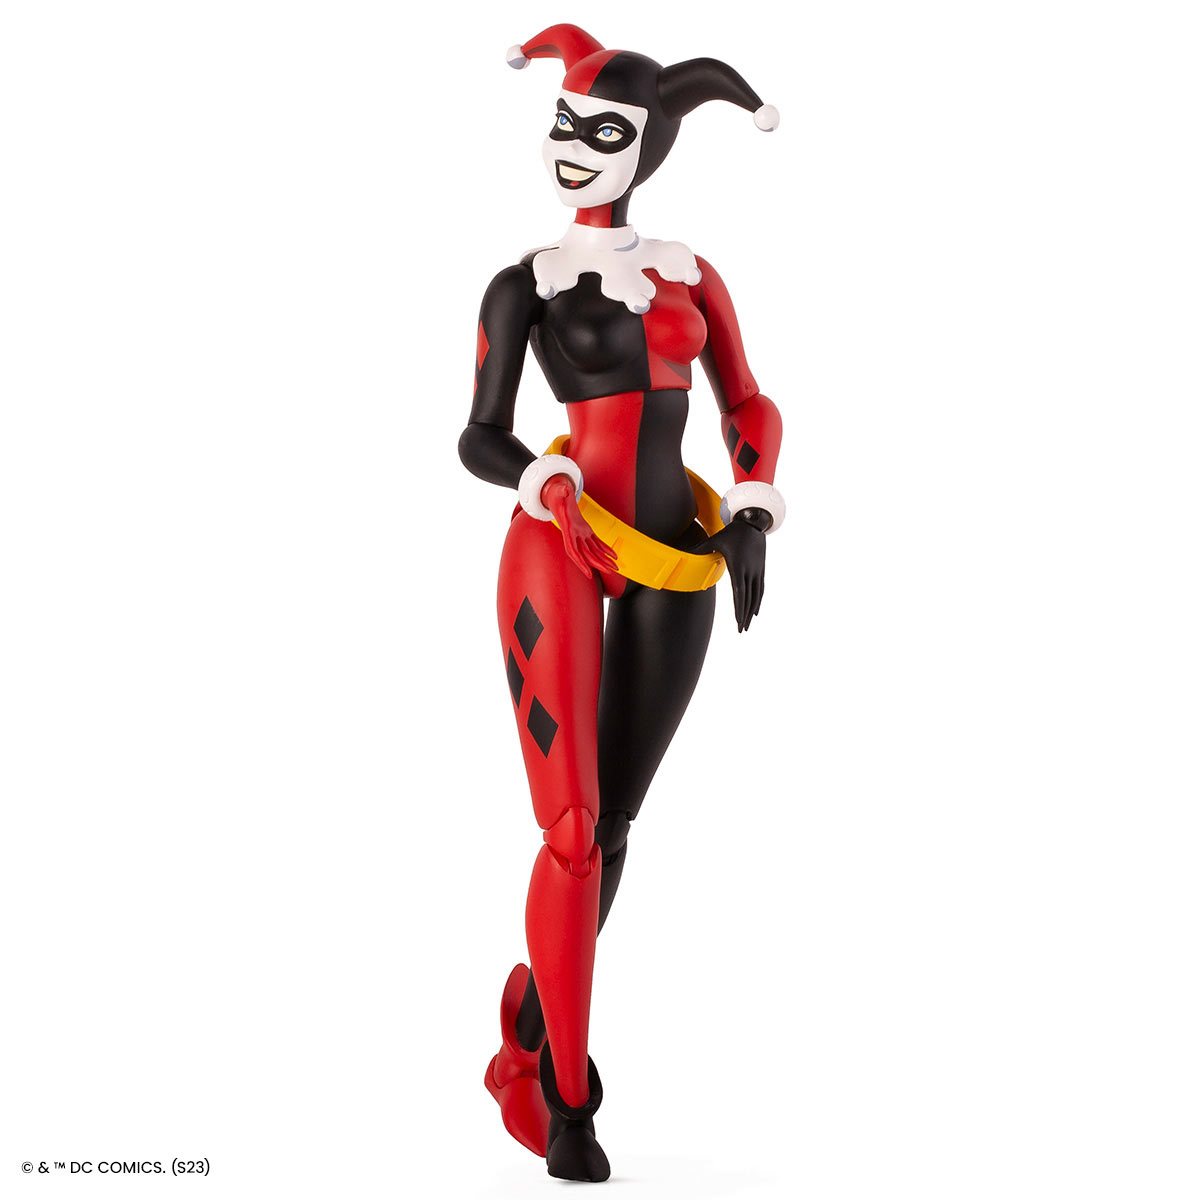 BATMAN: THE ANIMATED SERIES Harley Quinn 1/6 Scale Figure